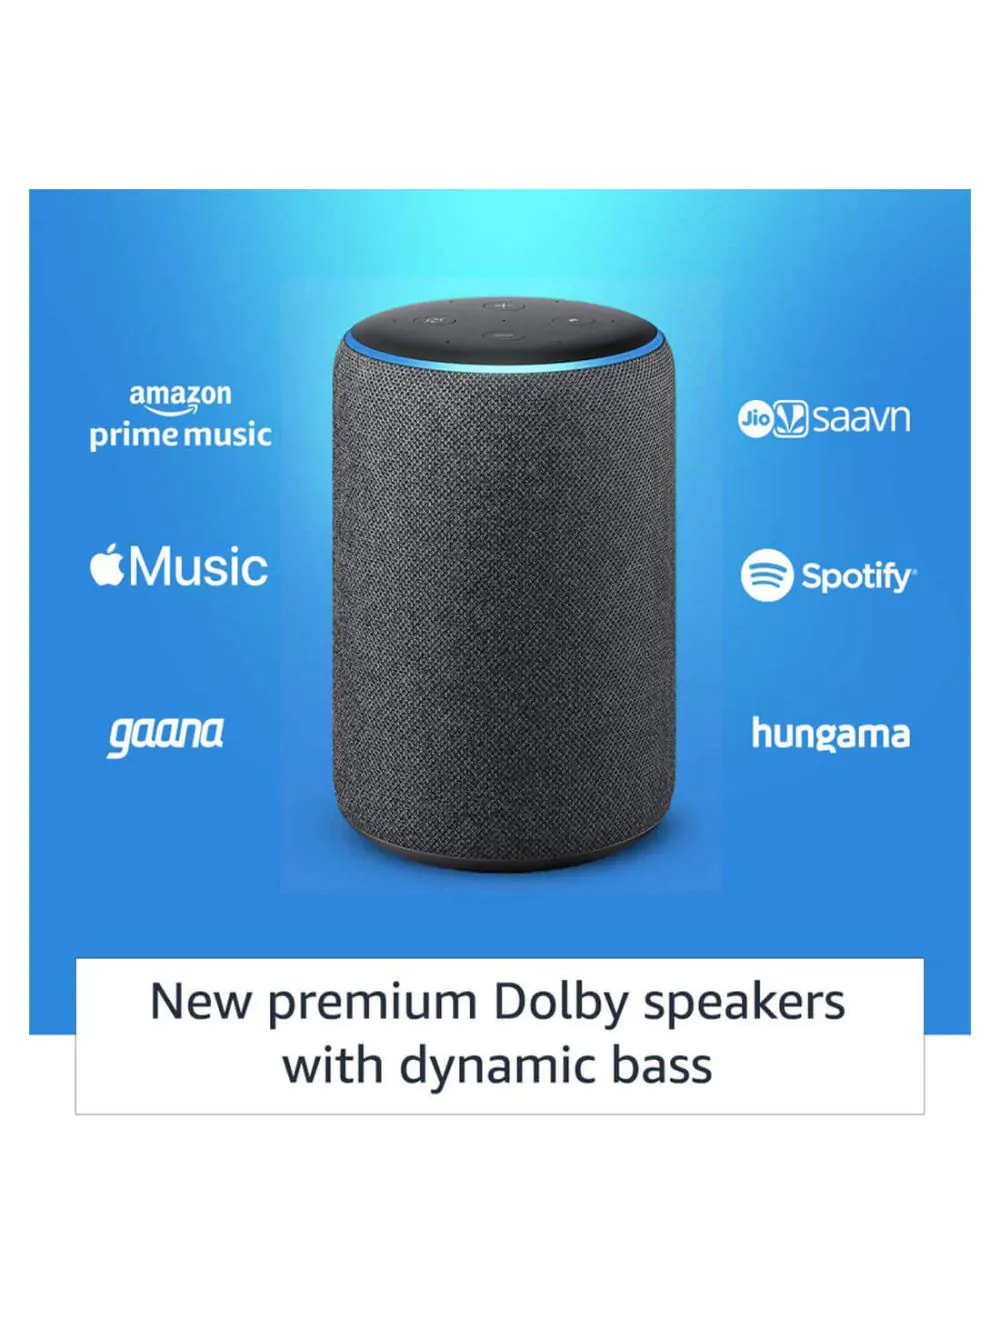 Echo Plus (2nd Gen) – Premium sound, powered by Dolby, built-in